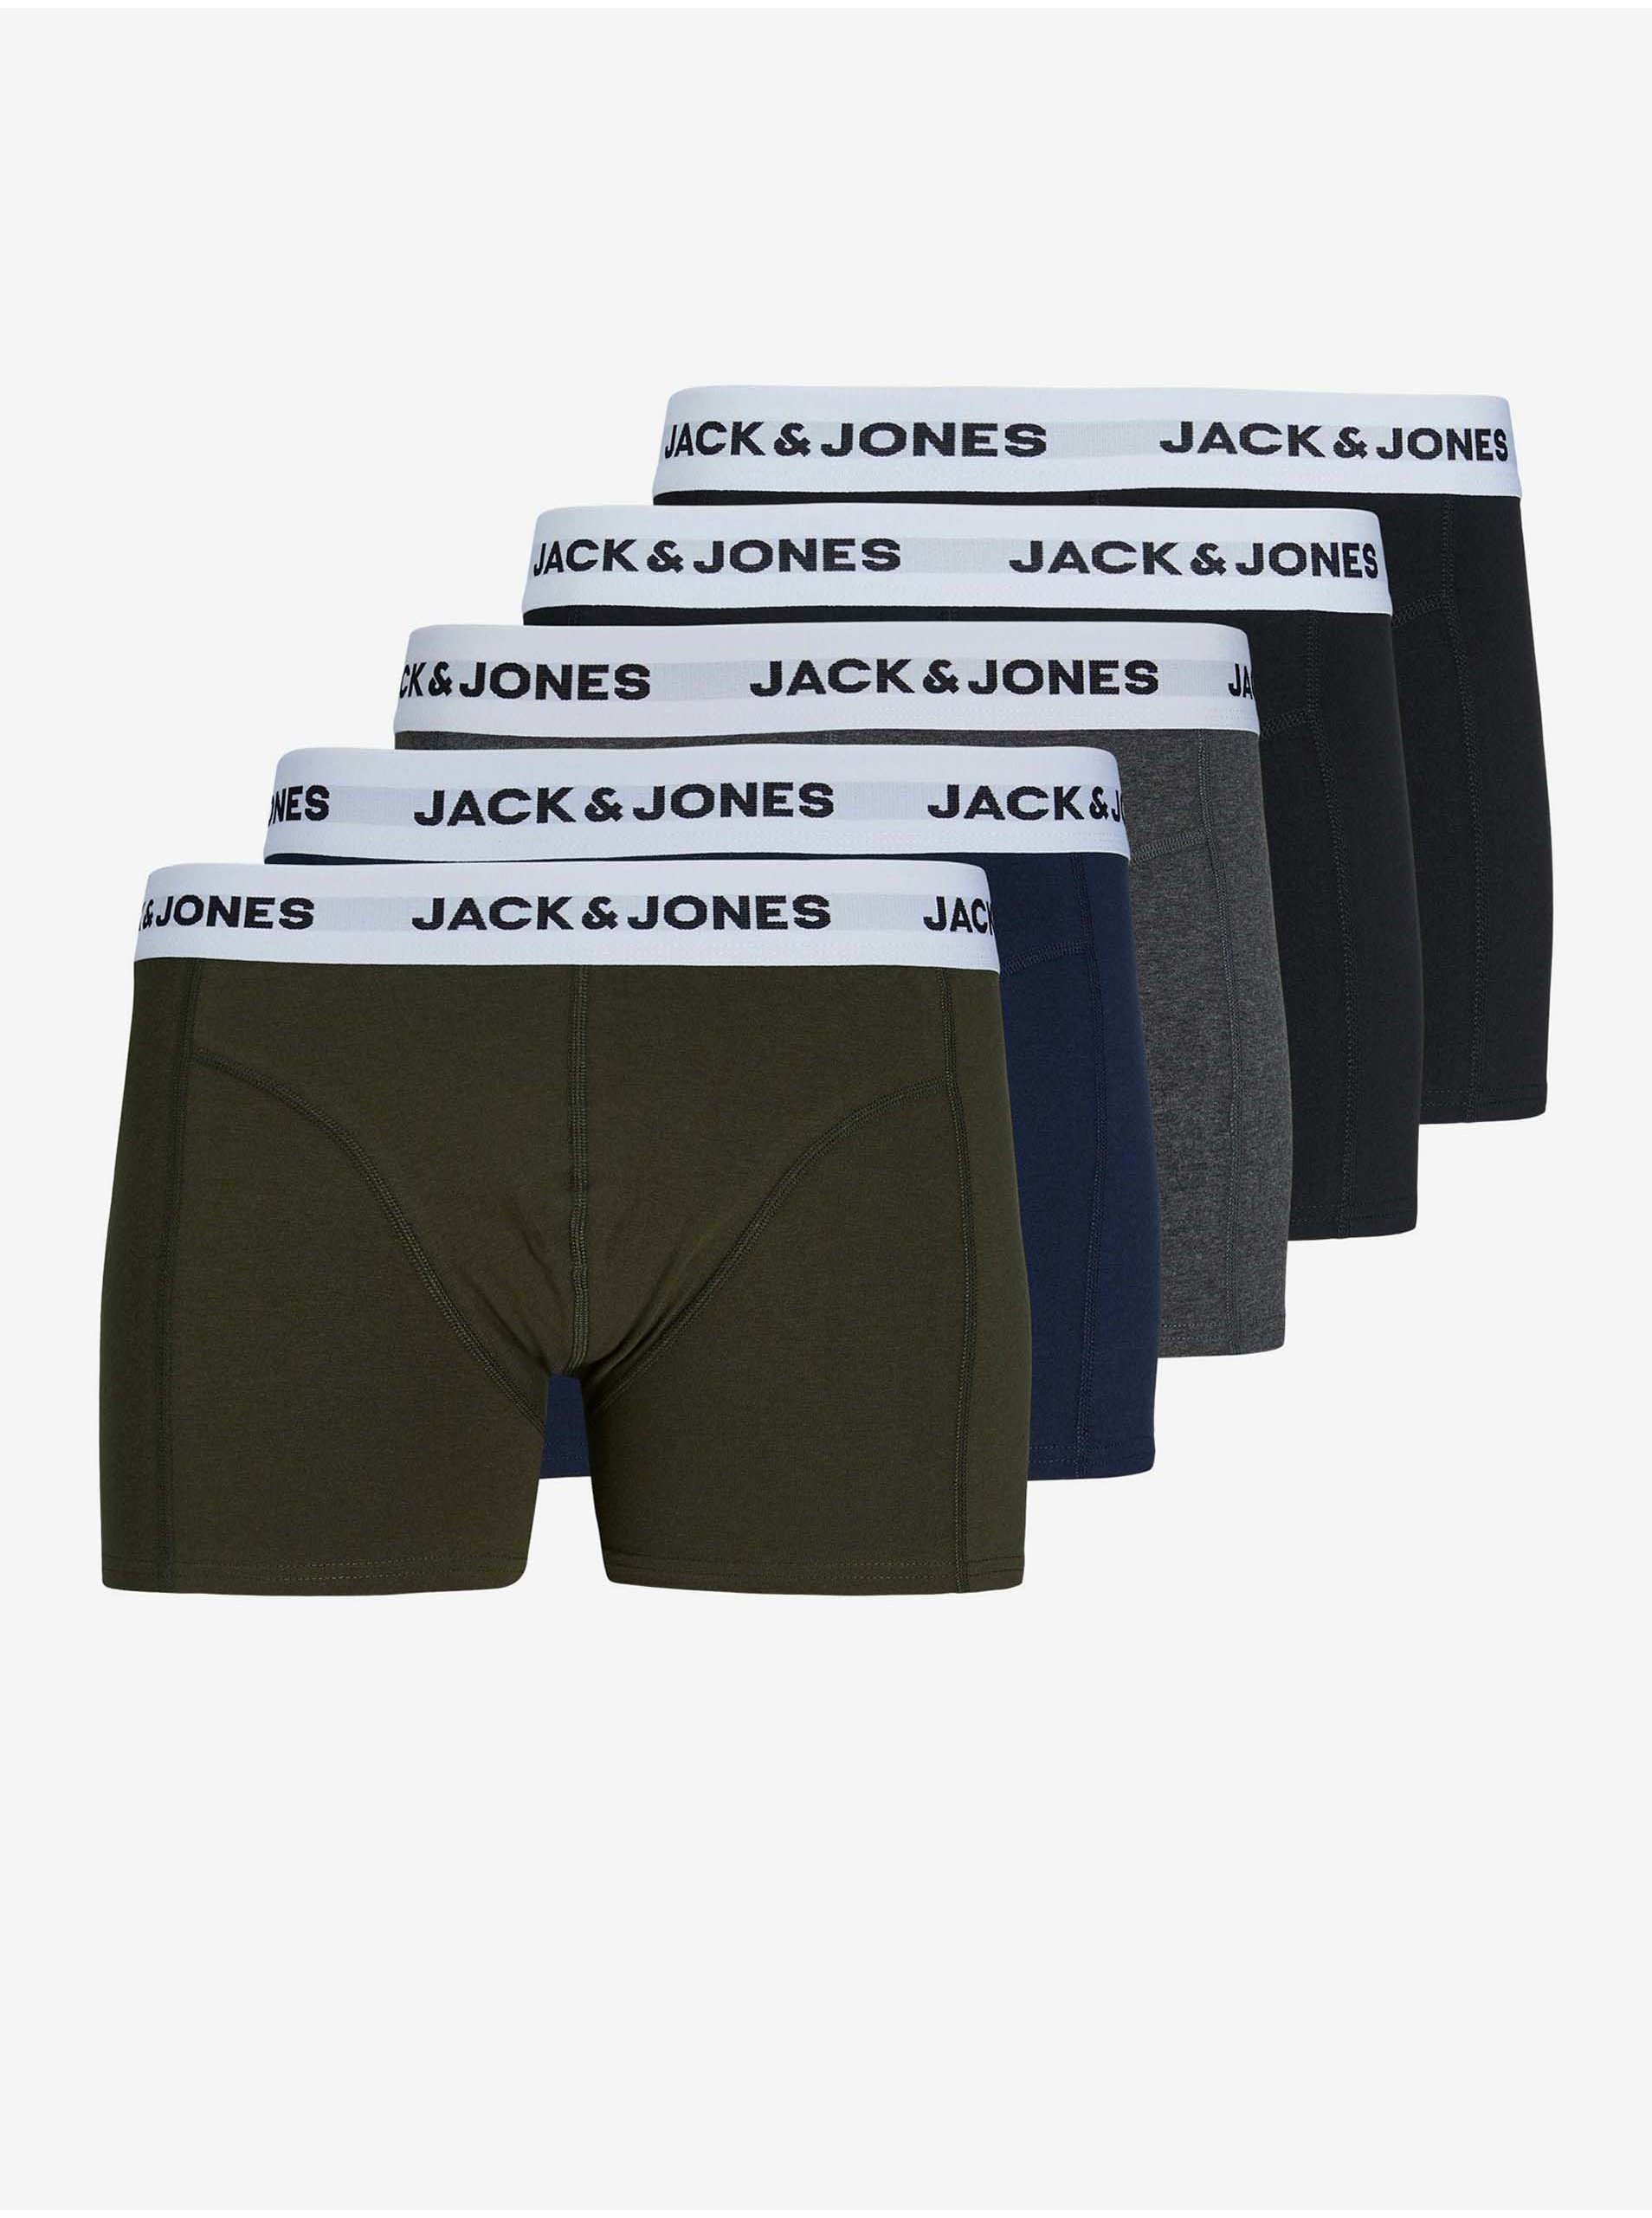 Jack & Jones Set of five boxer shorts in khaki, blue, grey and black Jack & Jone - Men's